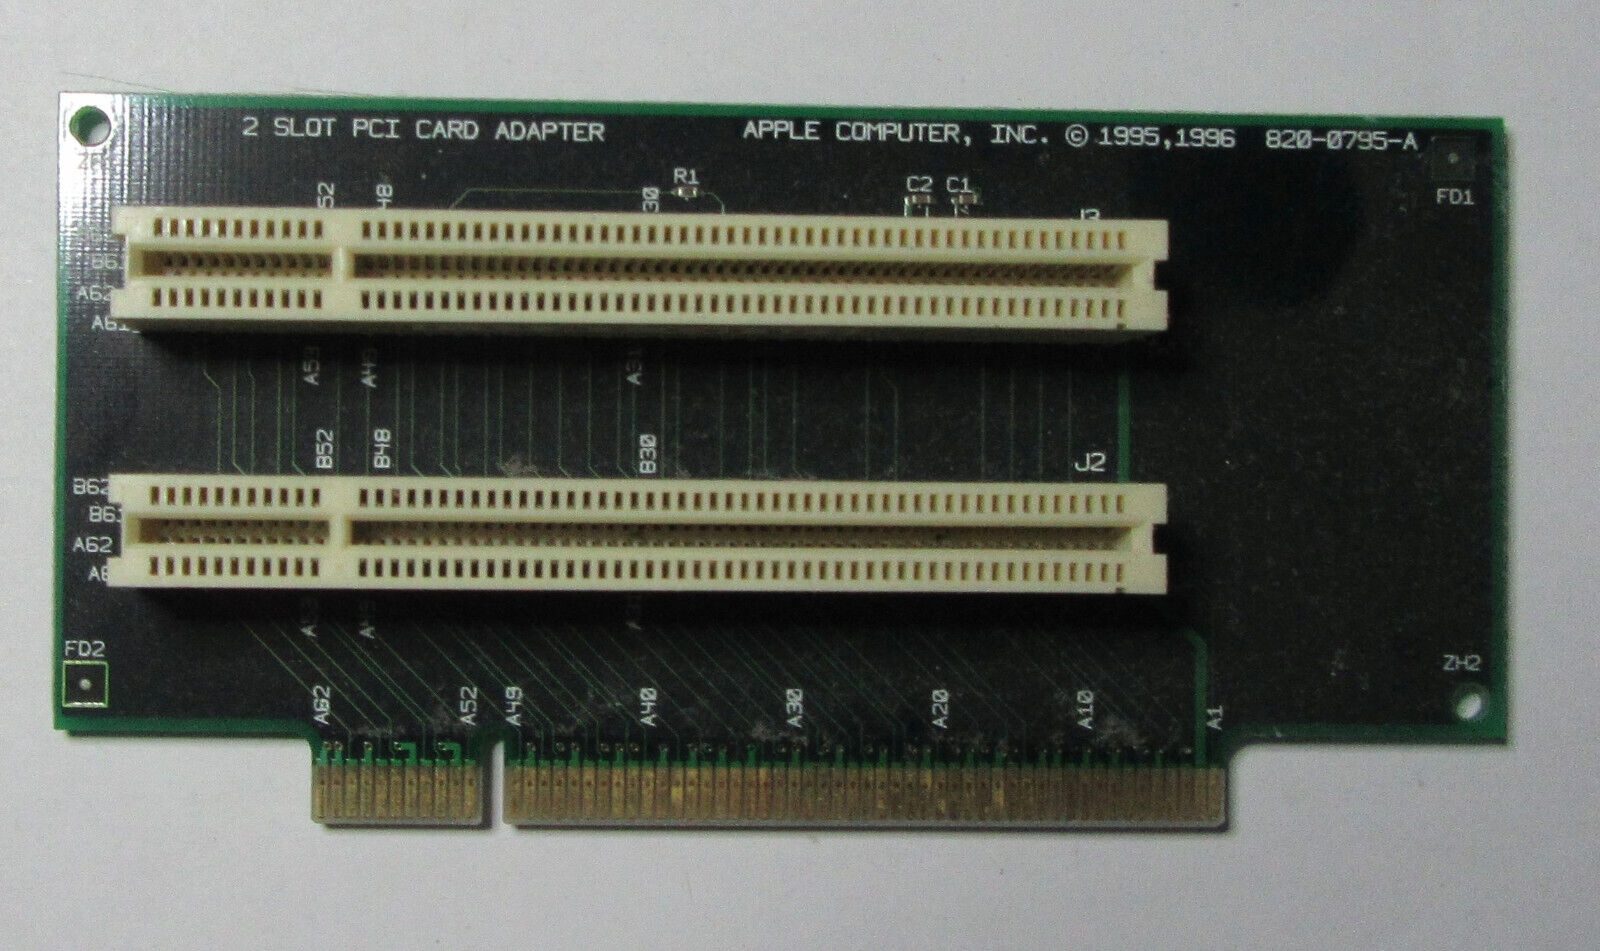 Genuine Vintage Apple 820-0795-A 2-Slot PCI Riser Card Adapter